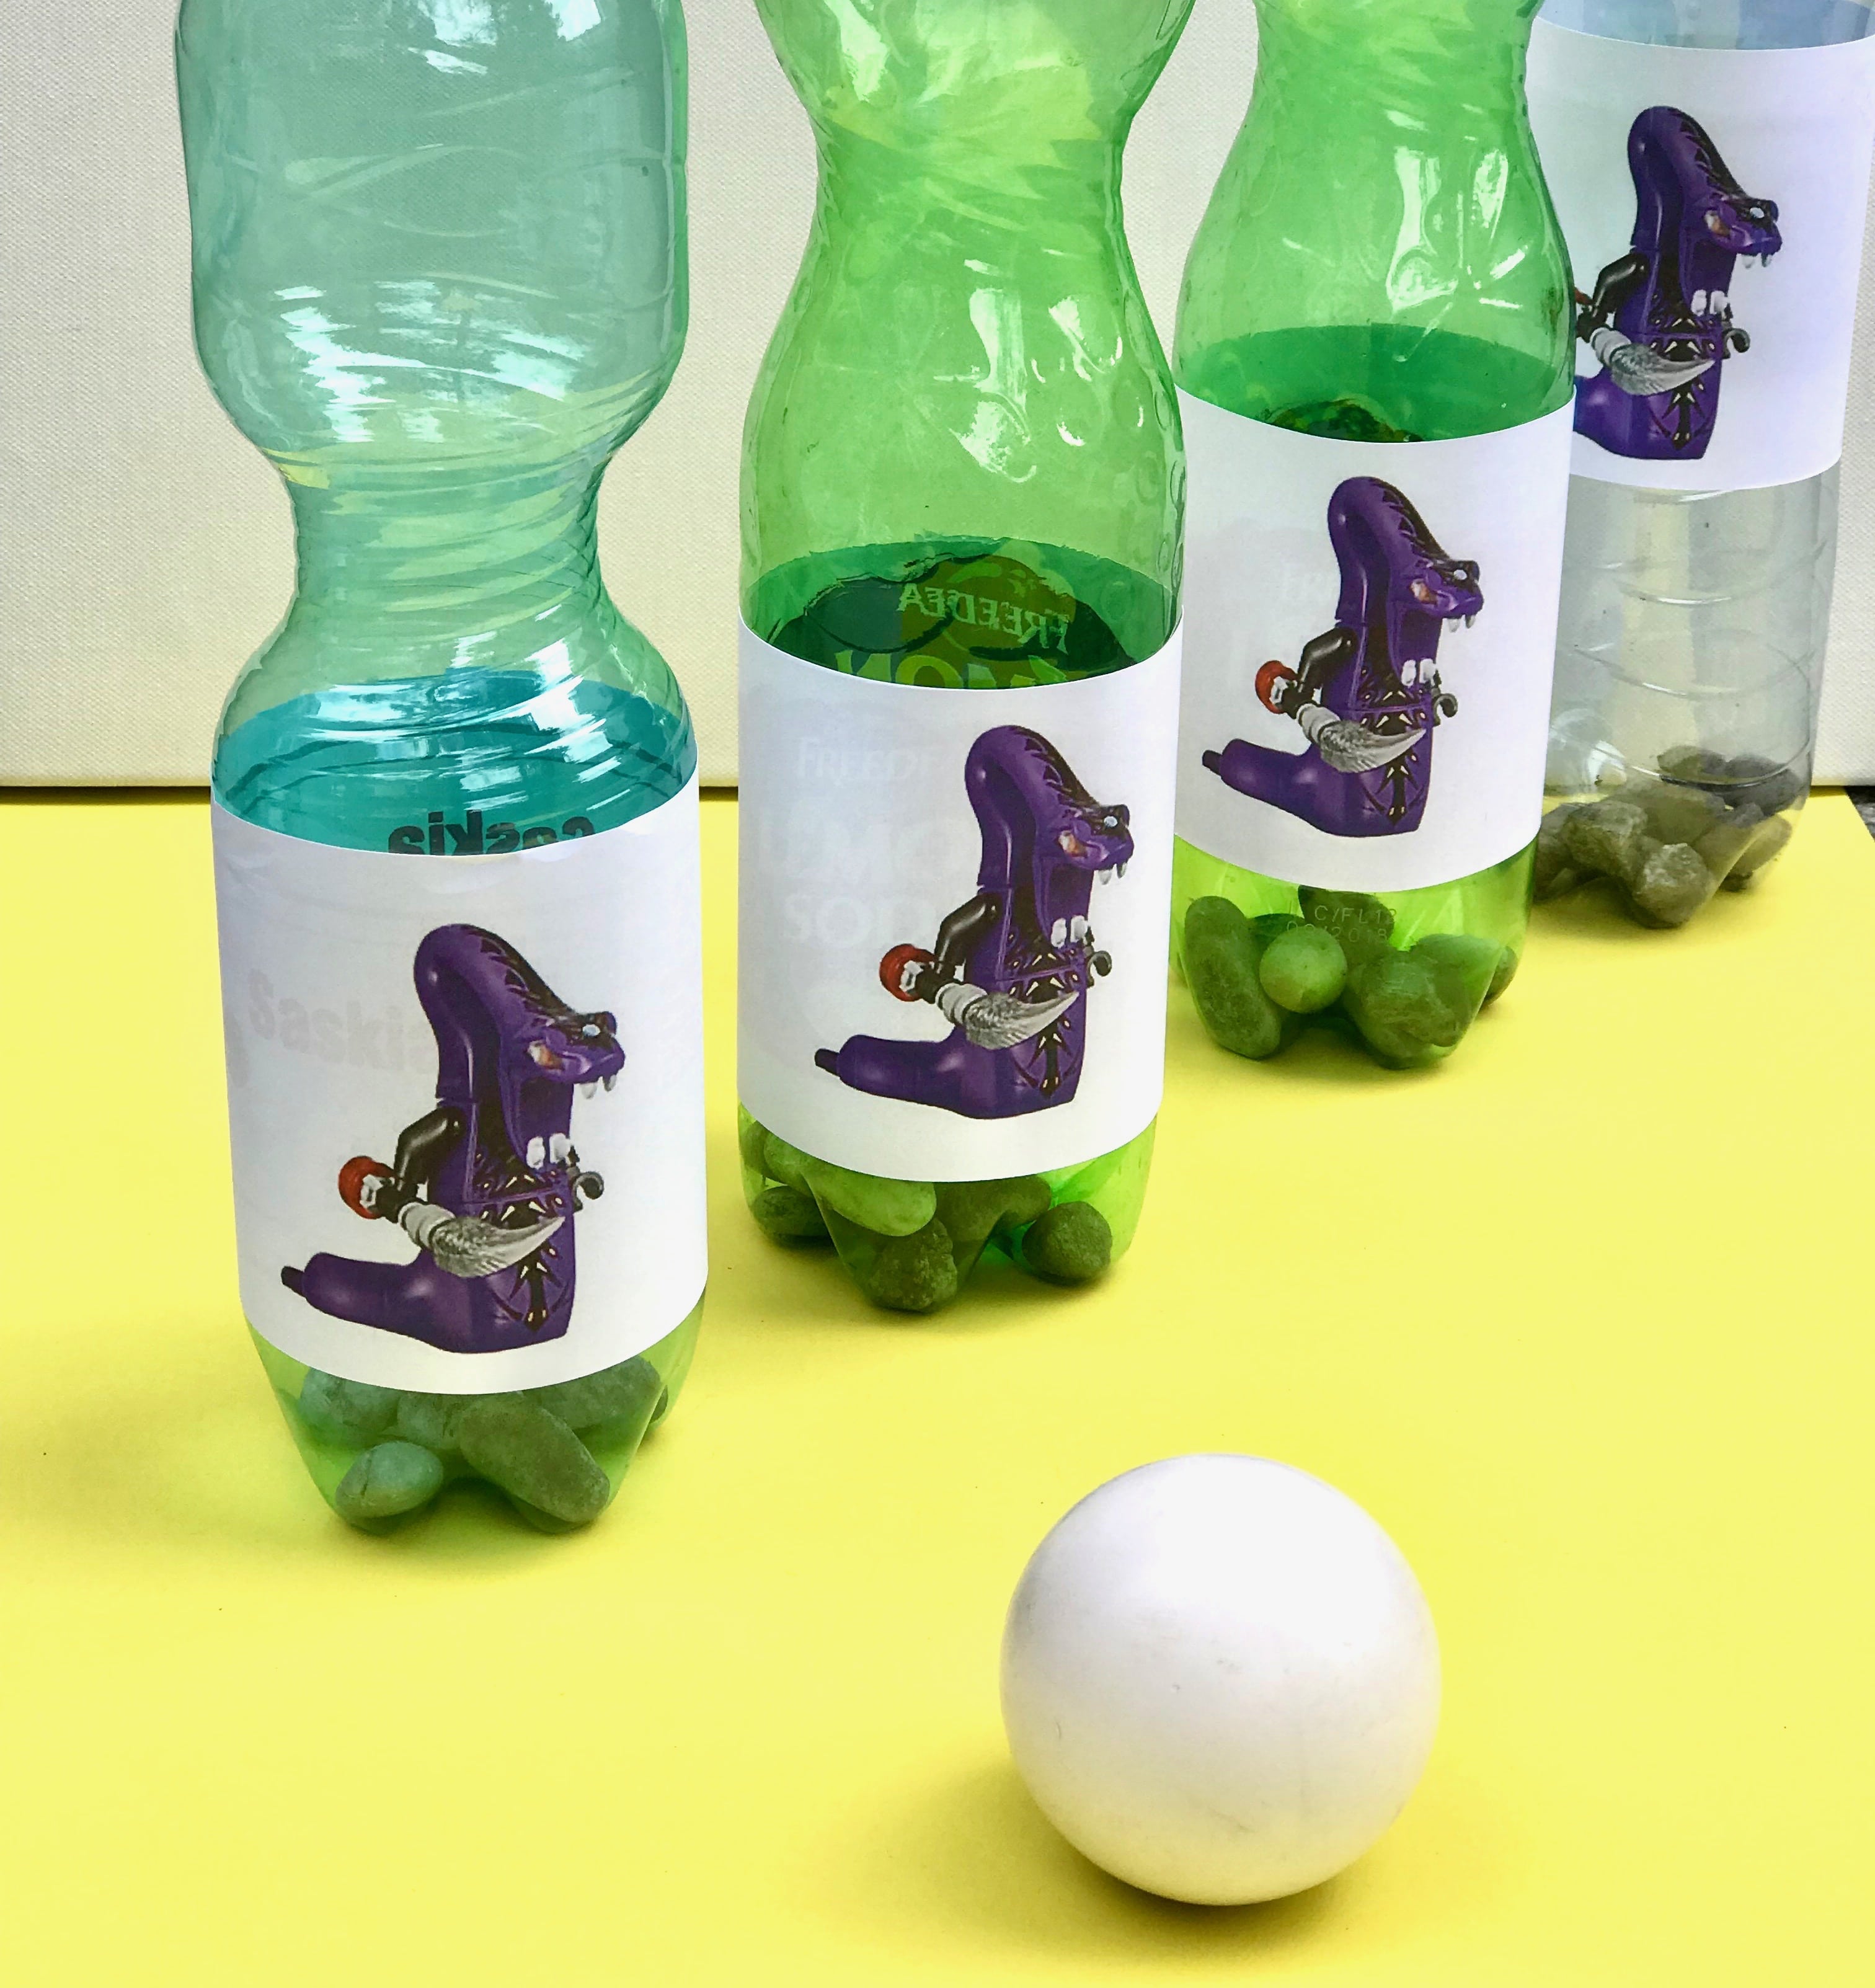 ninjago-geburtstag-spiel-idee-kegel-plastikflaschen-selbermachen-upcycling-kinder